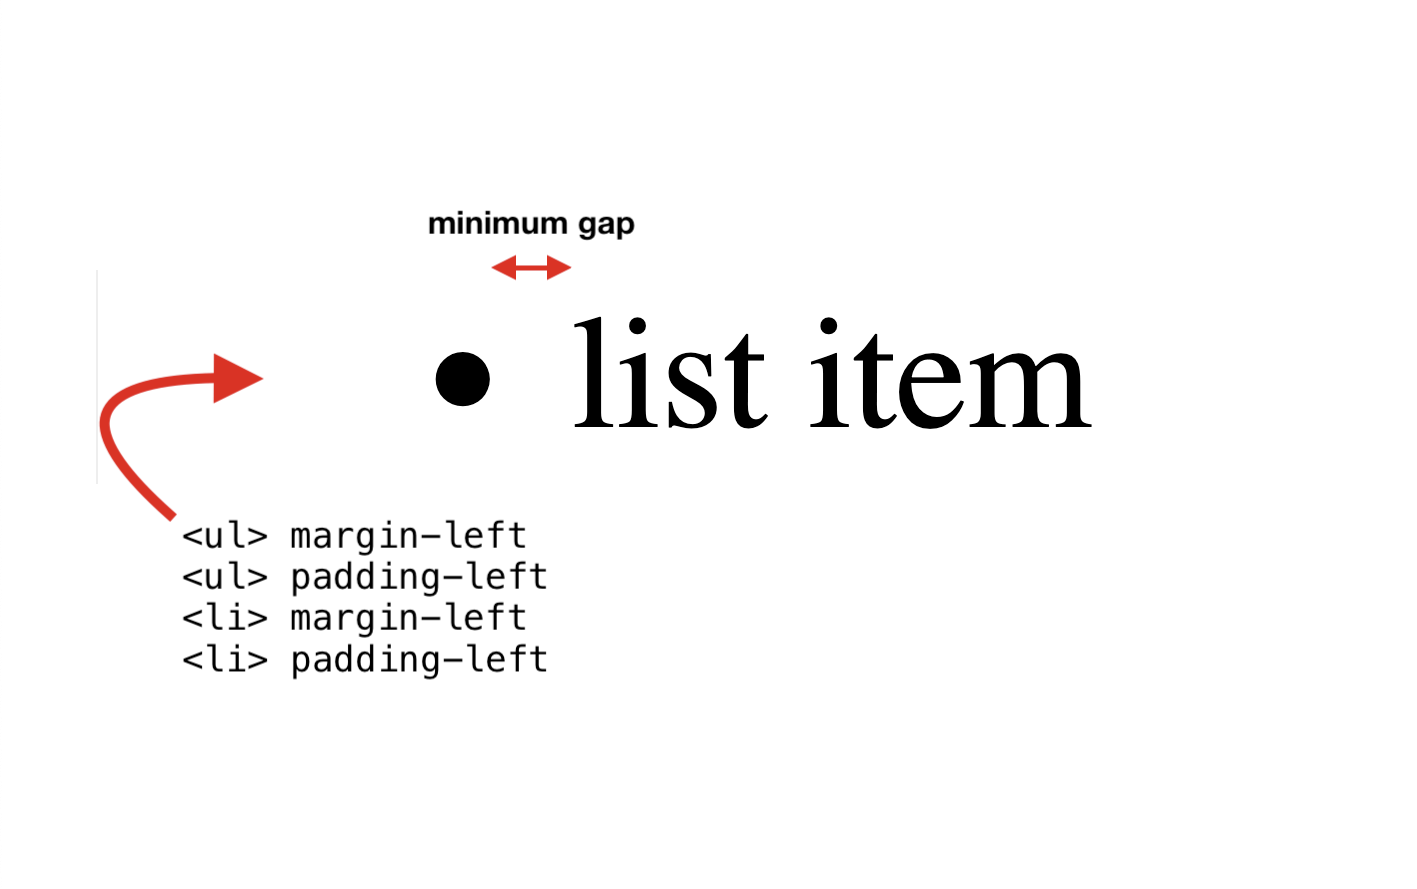 The four properties: UL margin-left, UL padding-left, LI margin-left, LI padding-left.